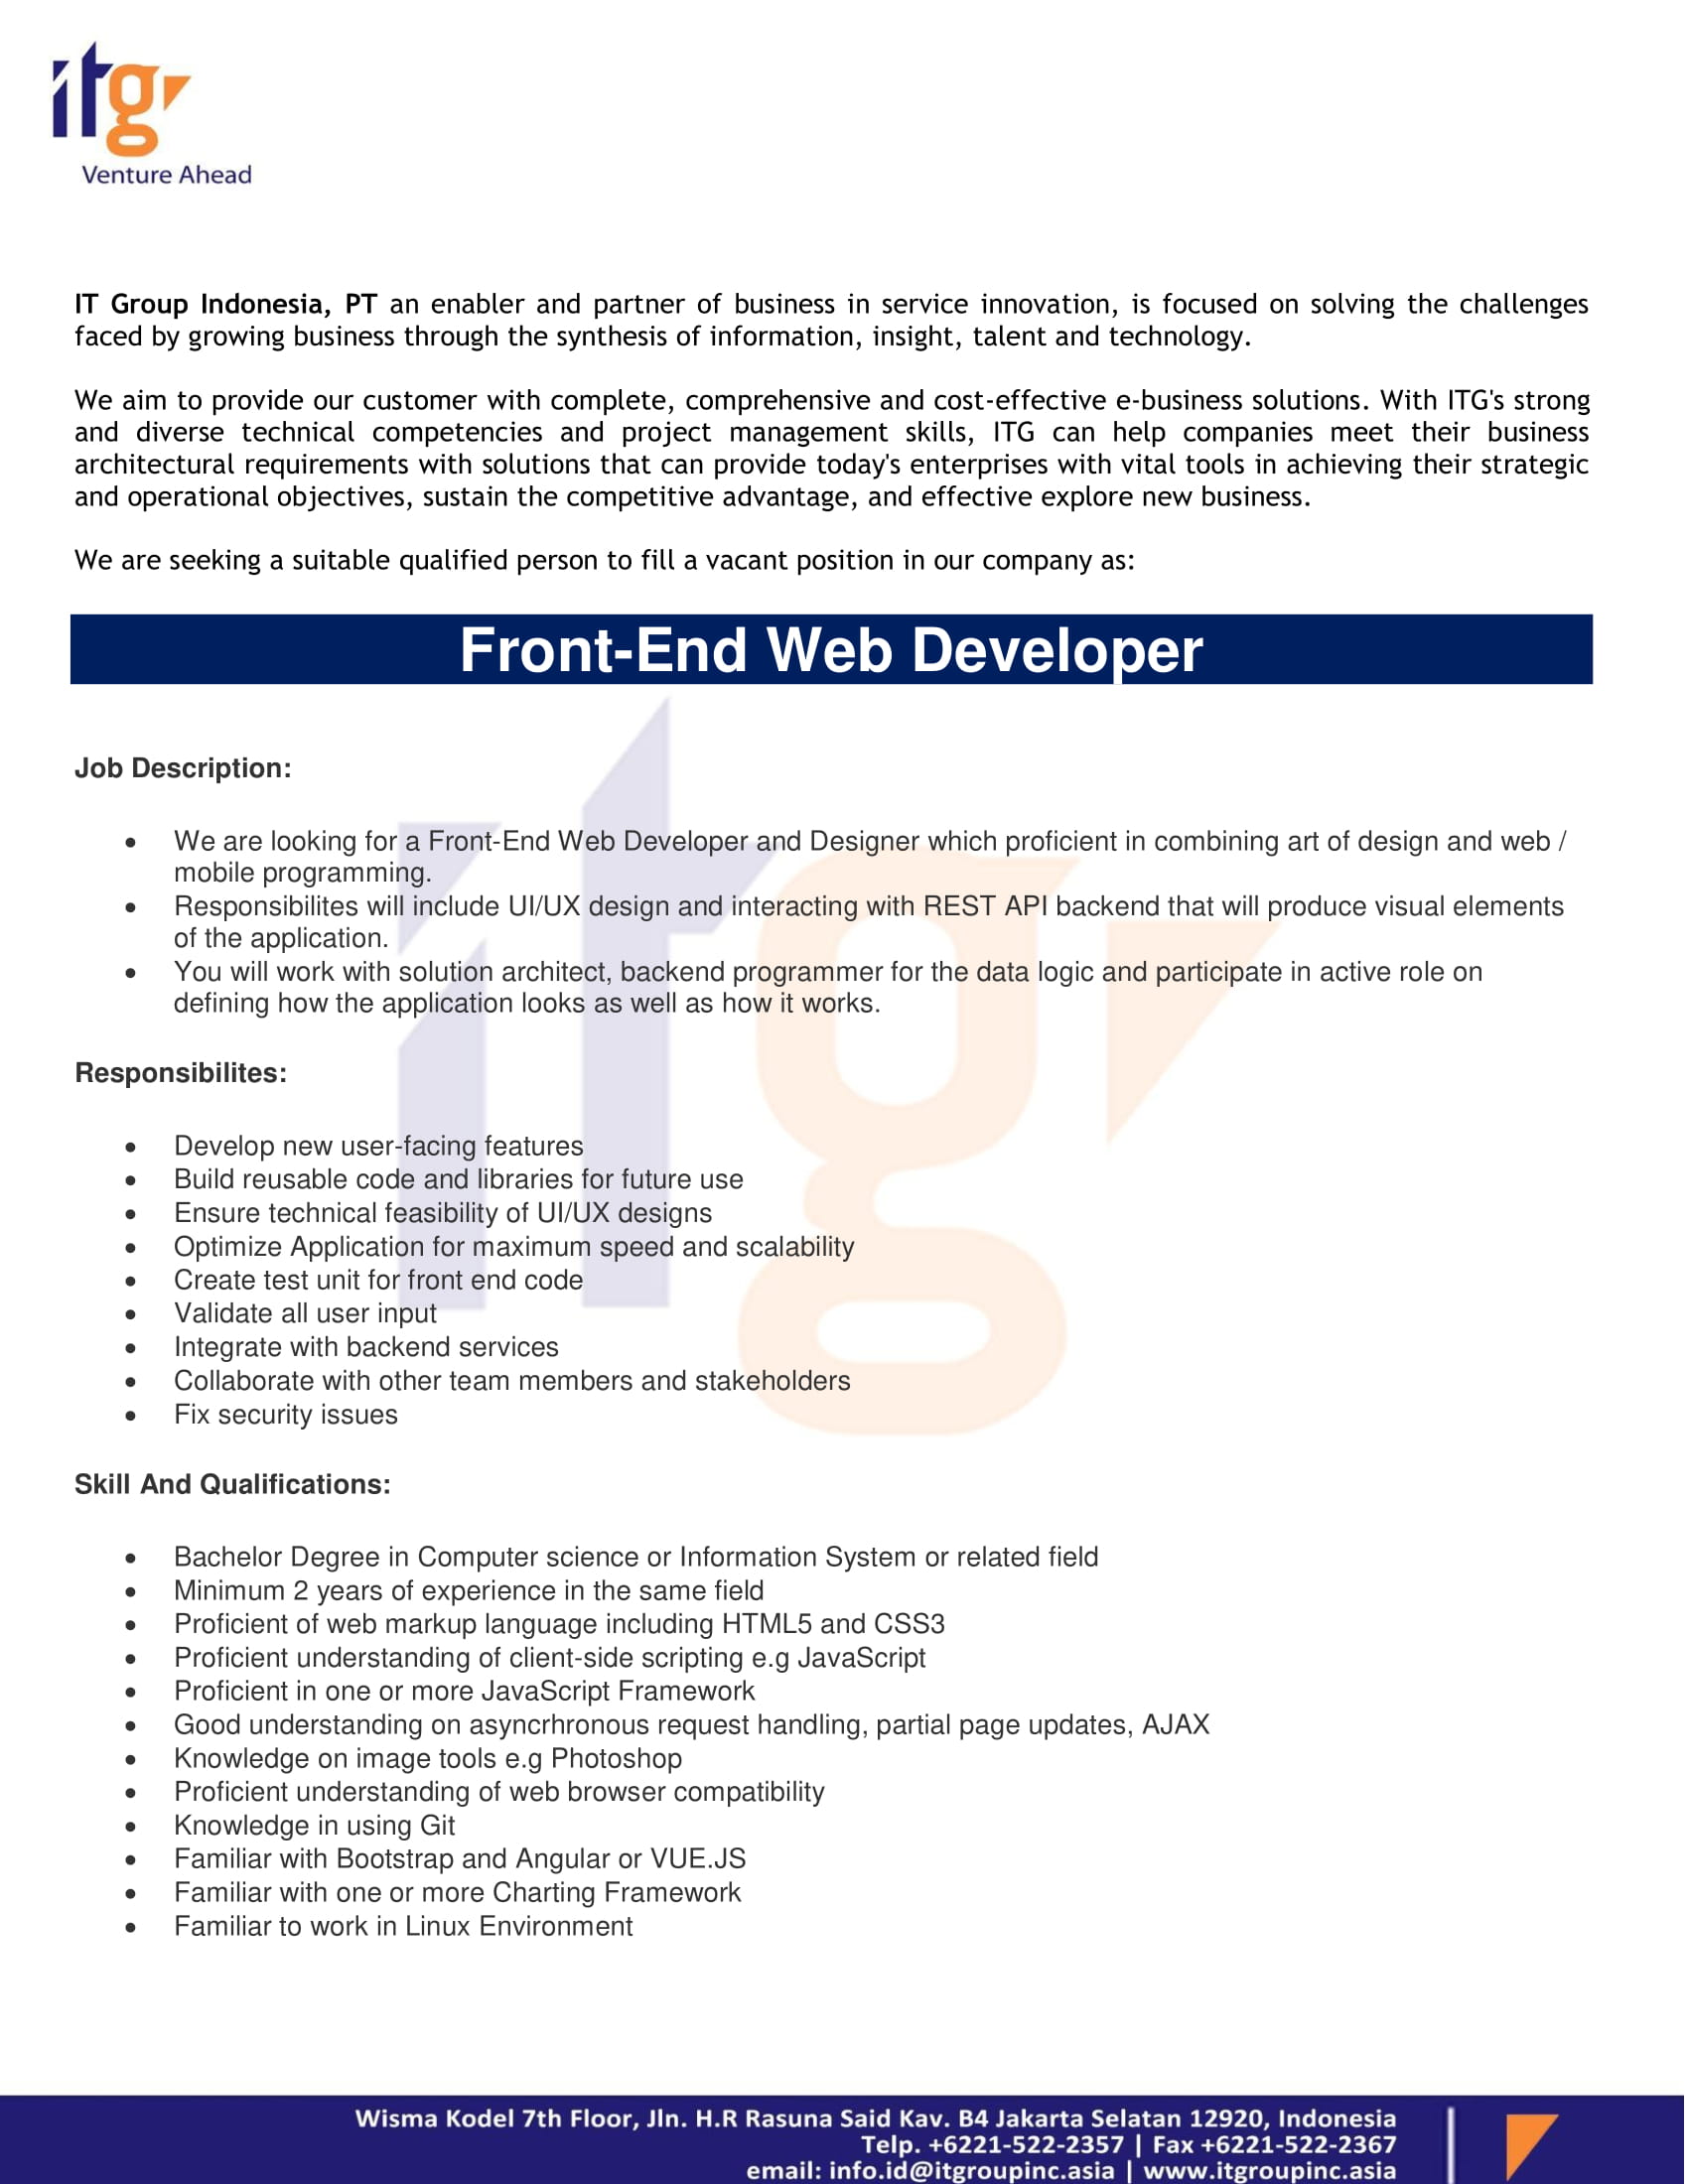 materi-lowongan-front-end-web-developer-1.jpg